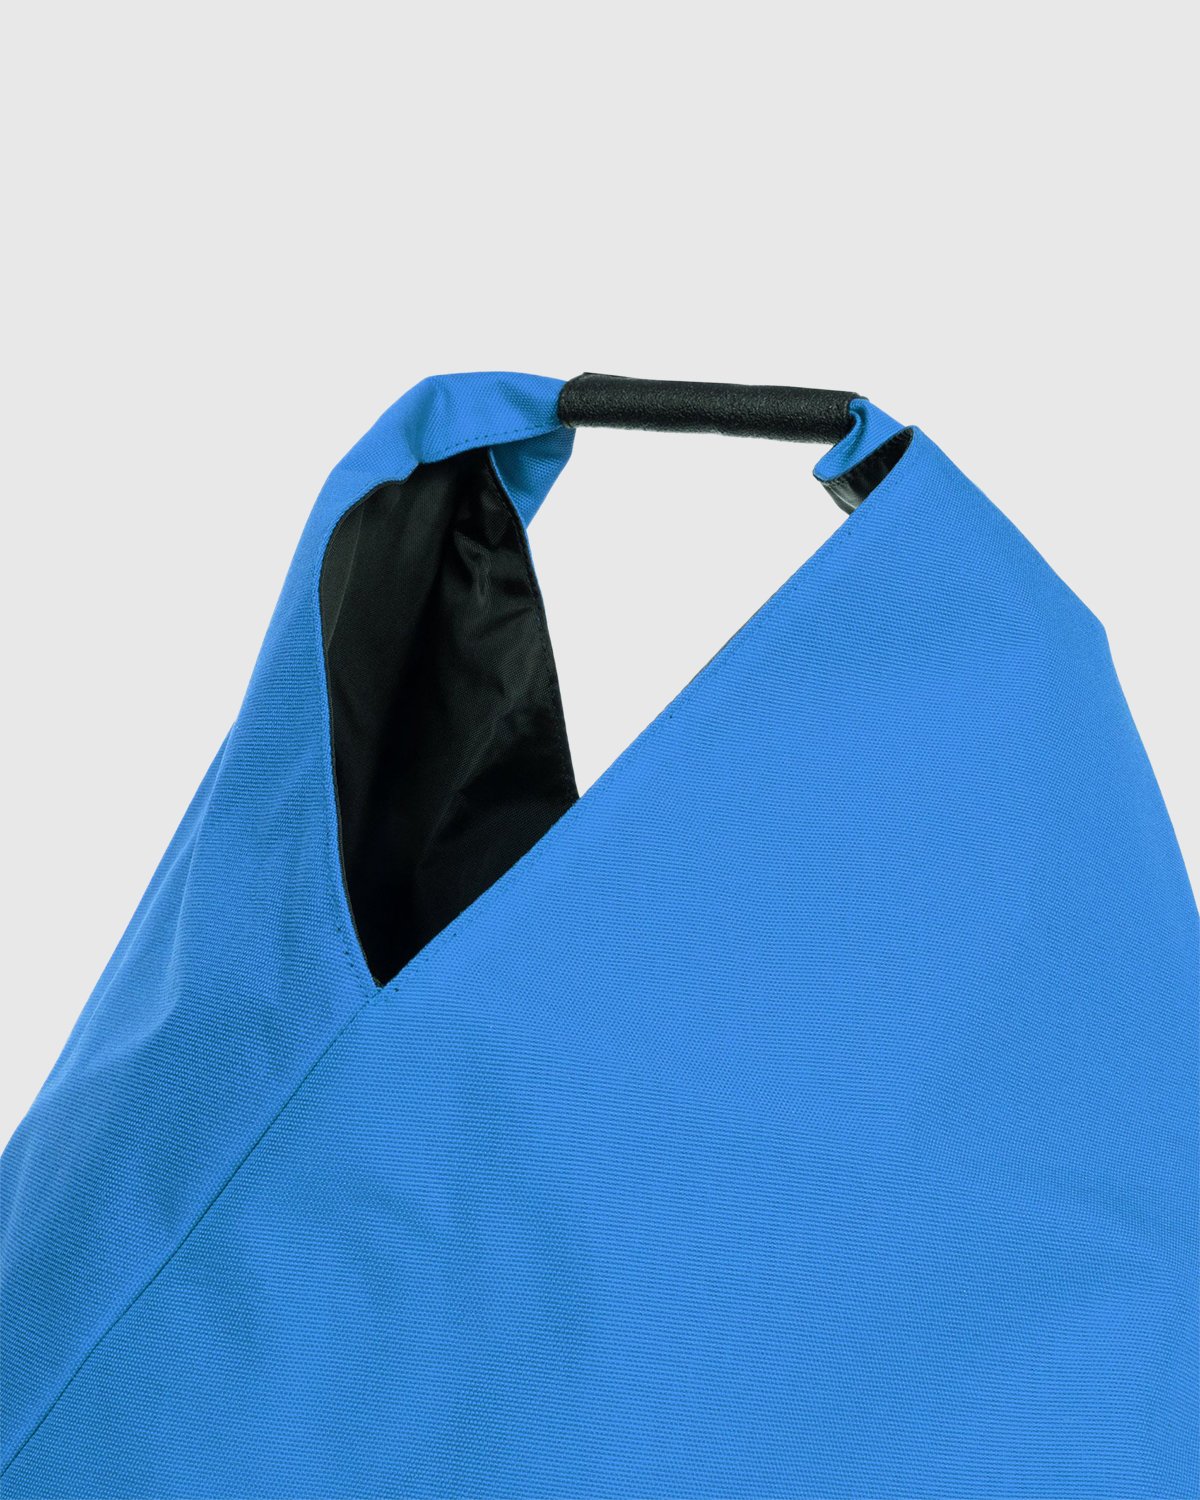 MM6 Maison Margiela x Eastpak - Shopping Bag Dazzling Blue - Accessories - Blue - Image 4